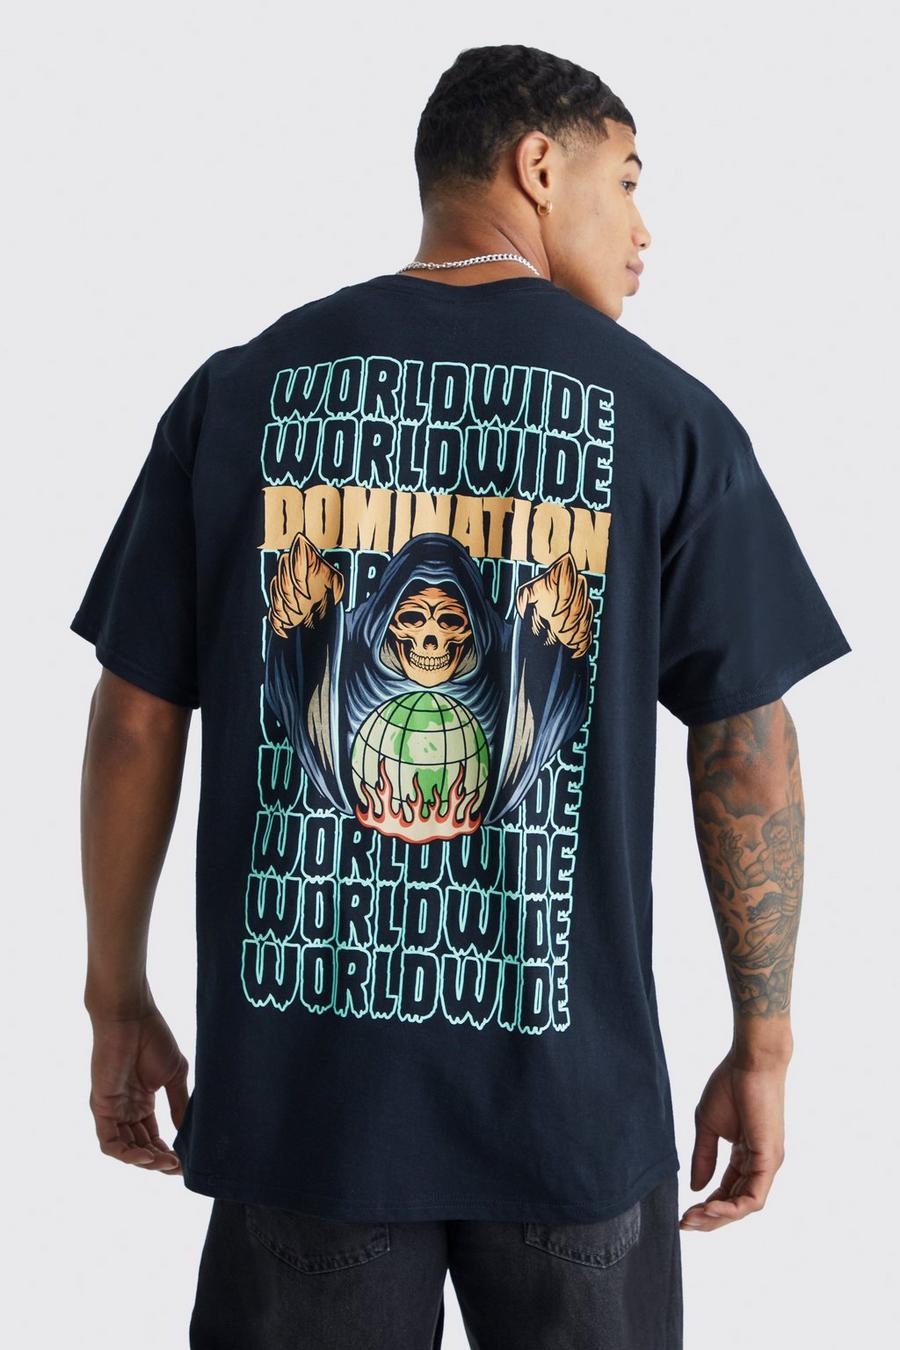 T-shirt oversize imprimé Worldwide, Black